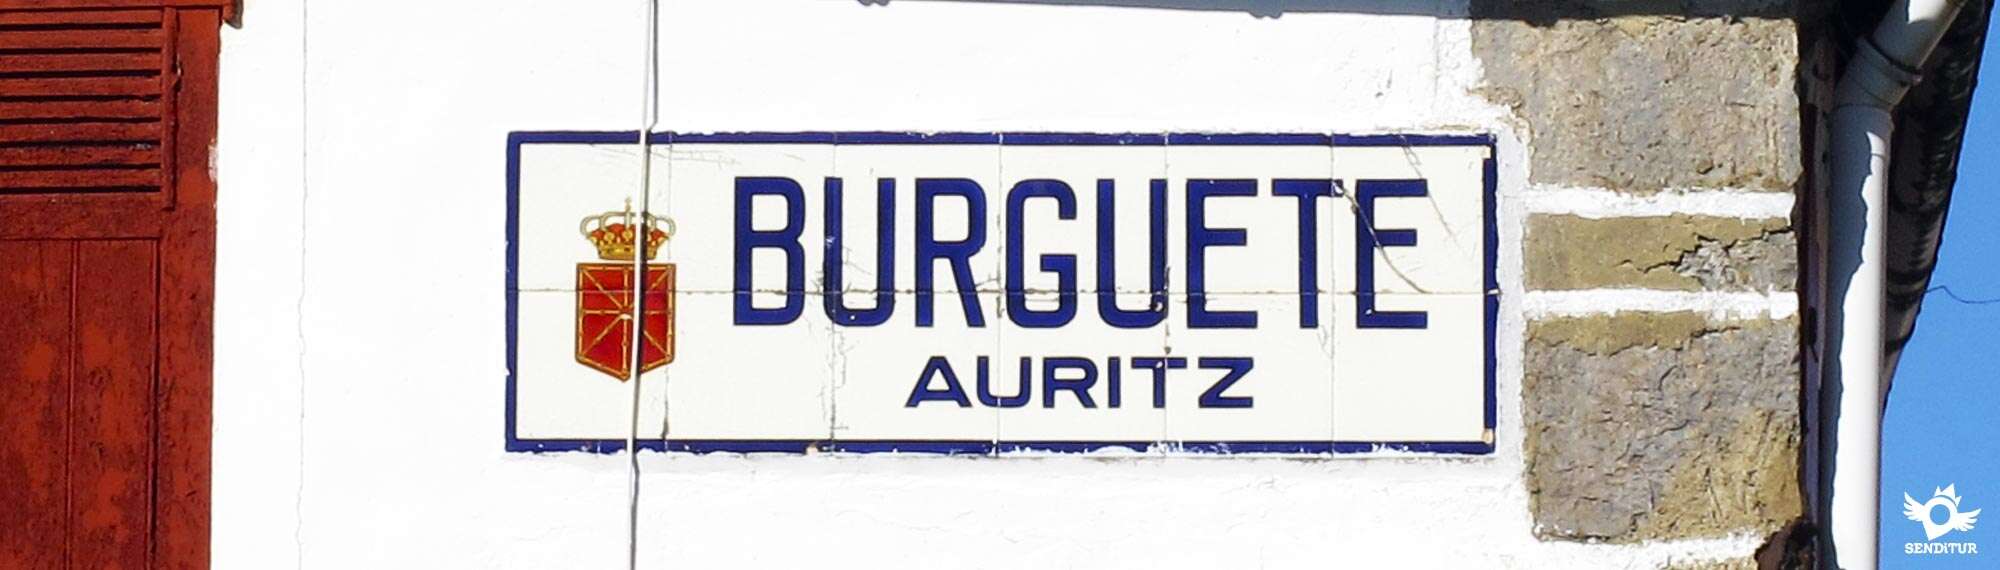 Auritz/Burguete